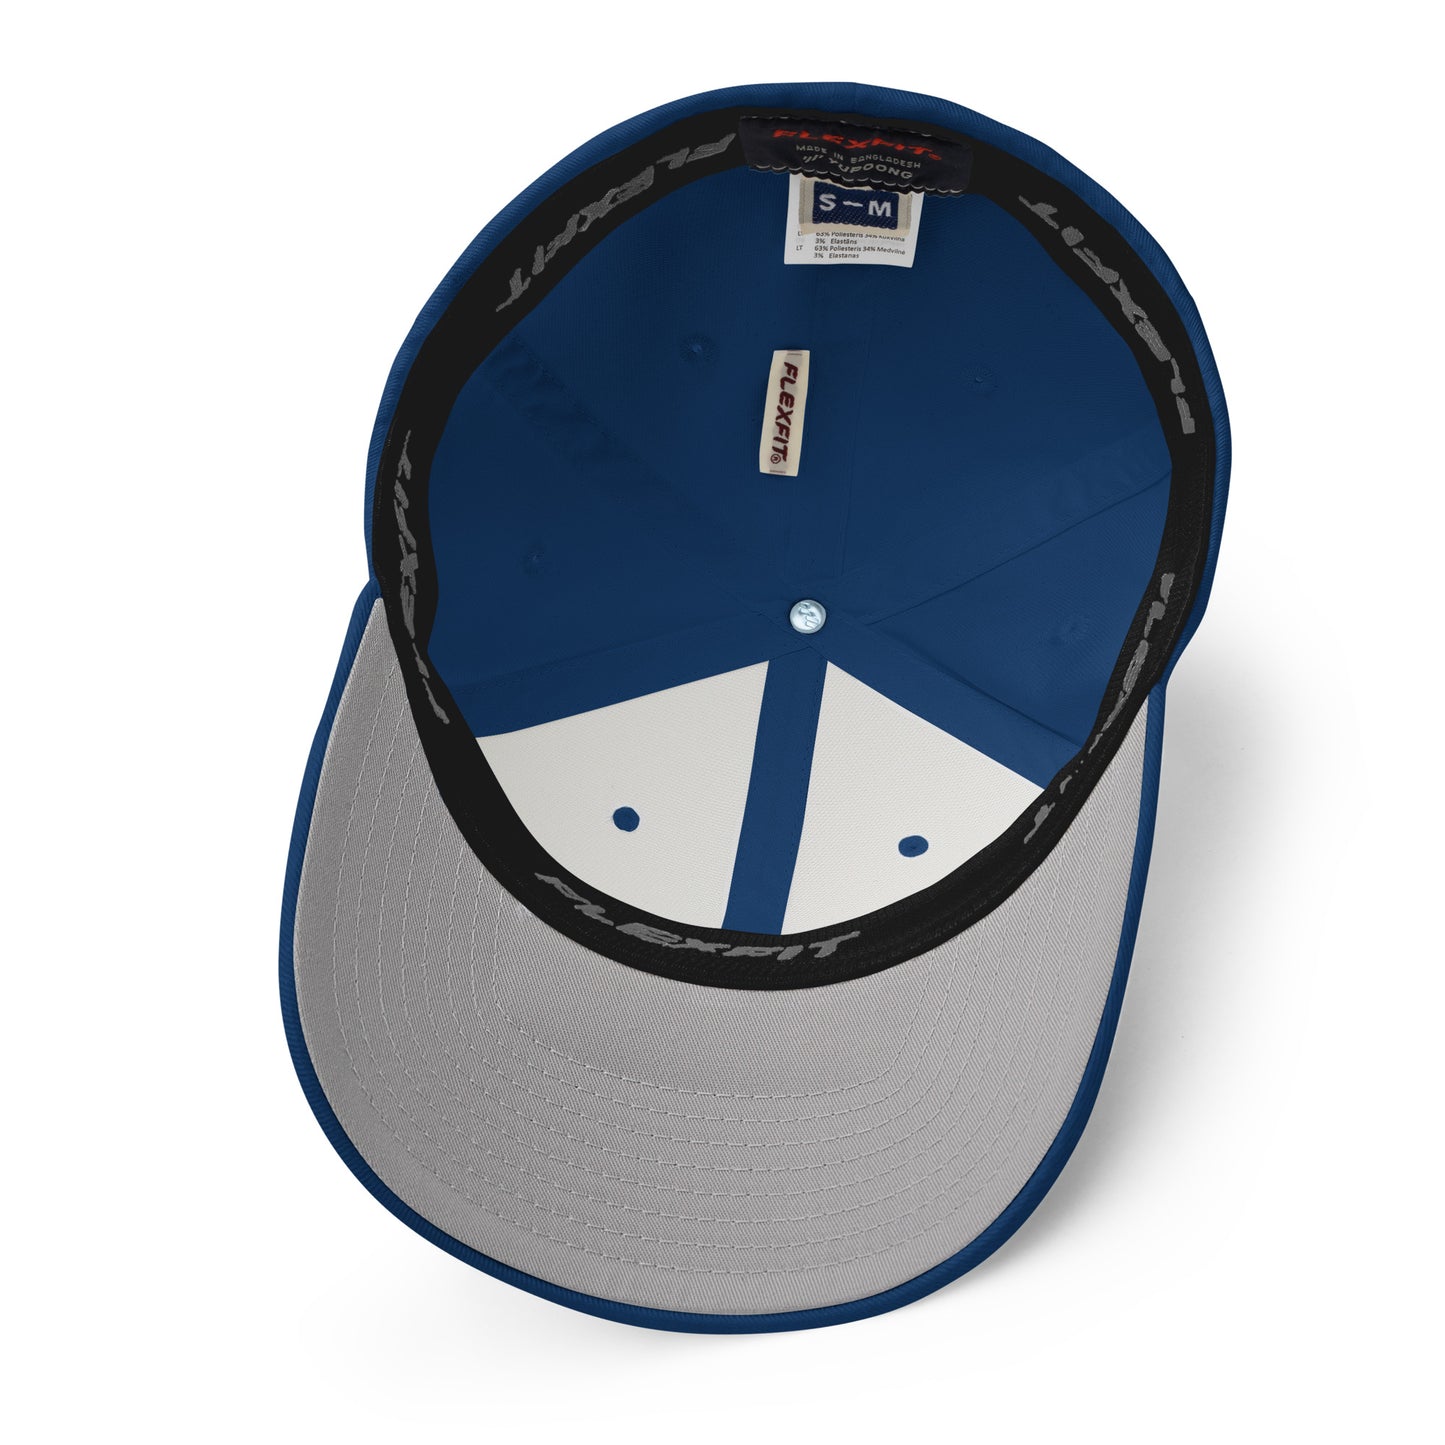 Libertas/TKW FlexFit Hat